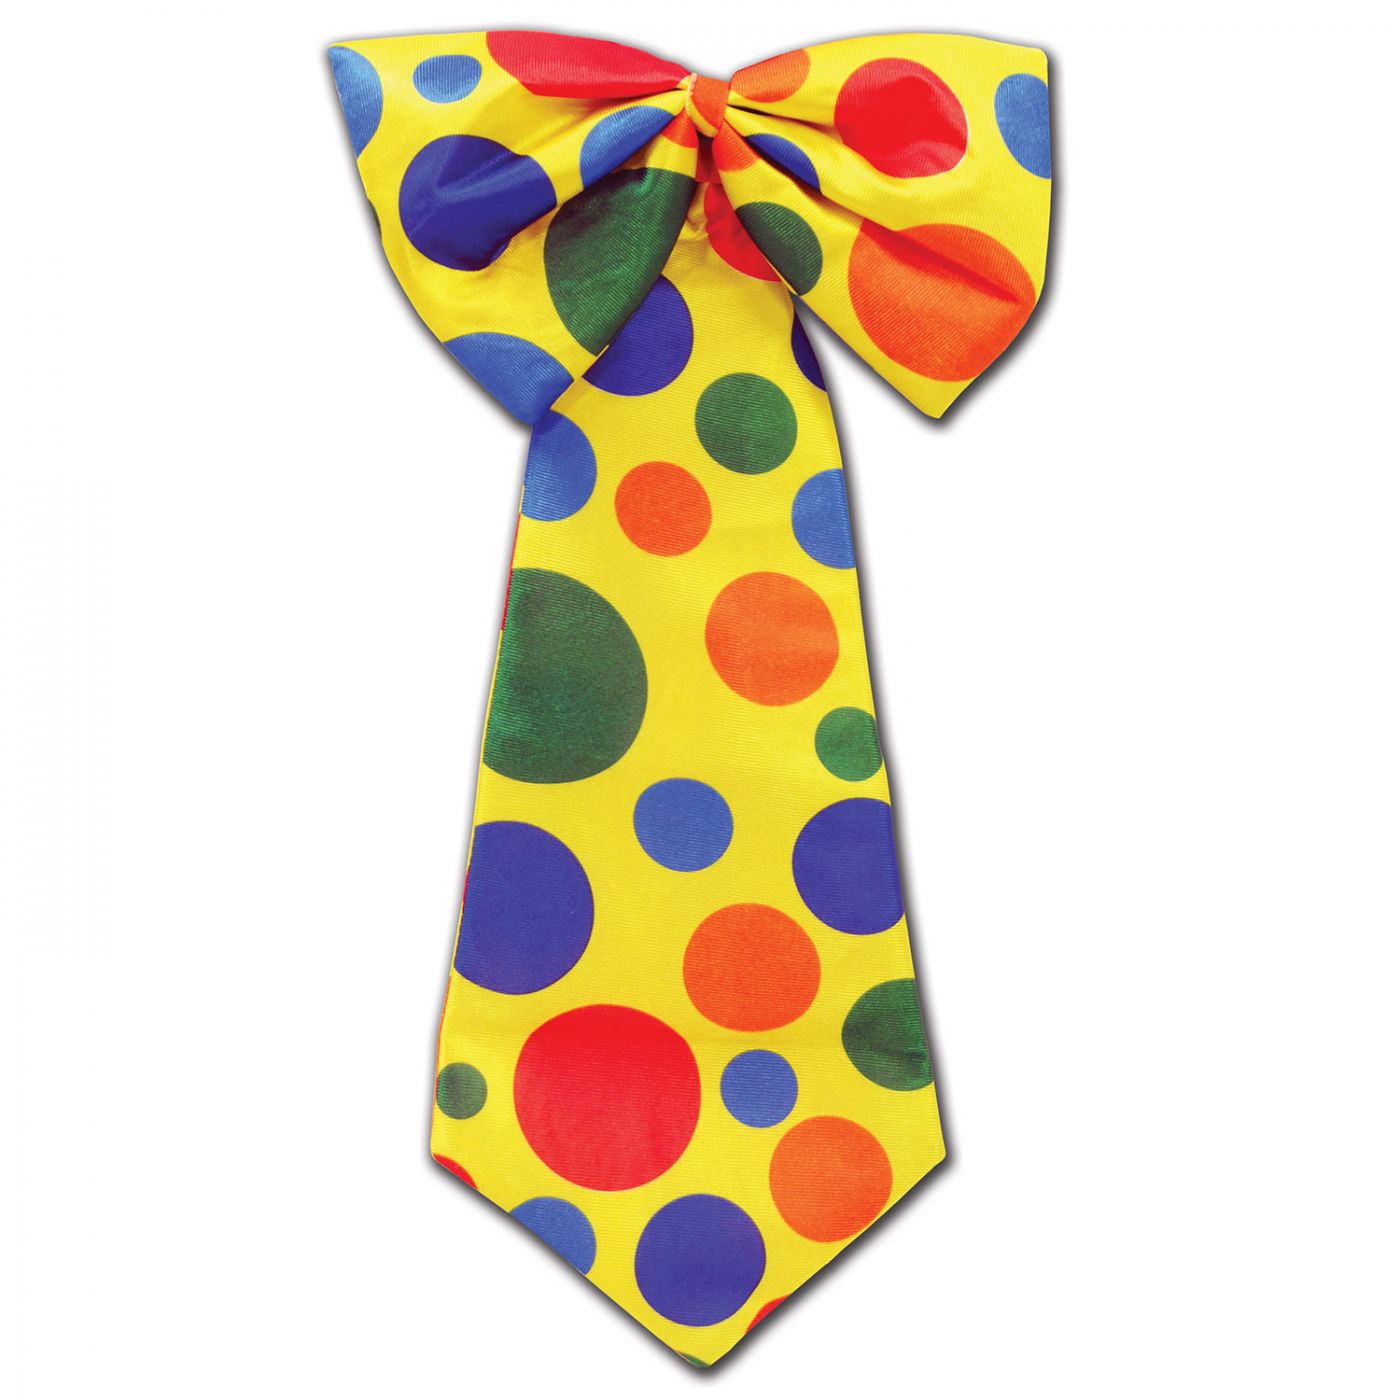 Clown Tie image